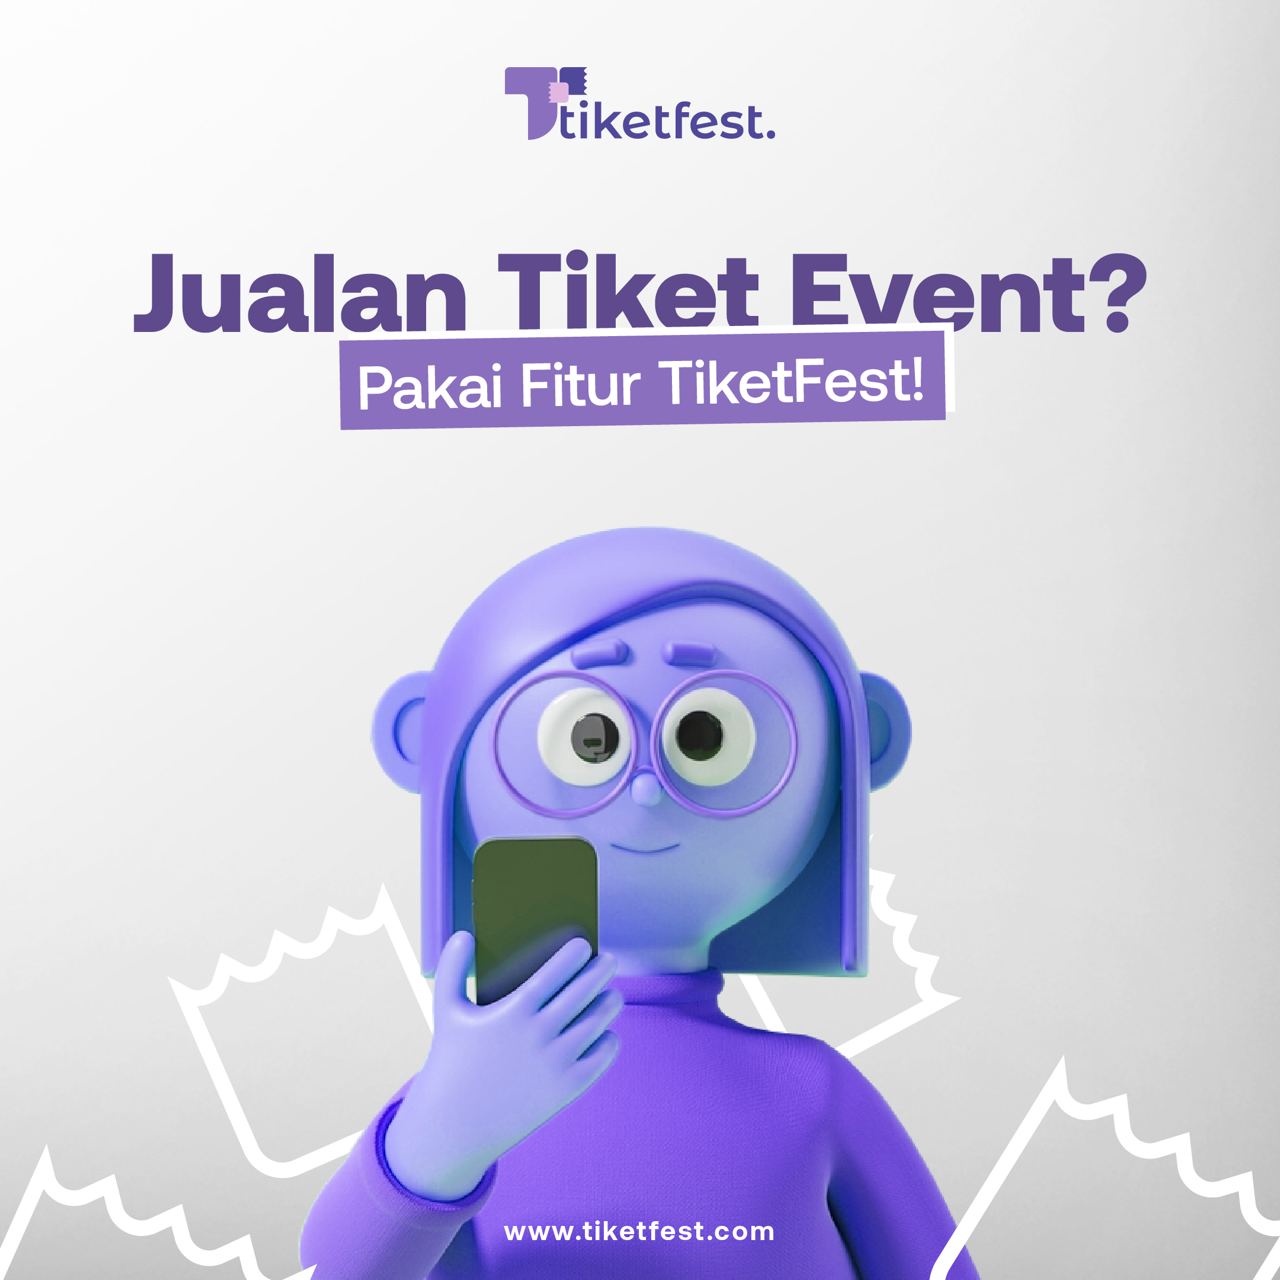 TiketFest